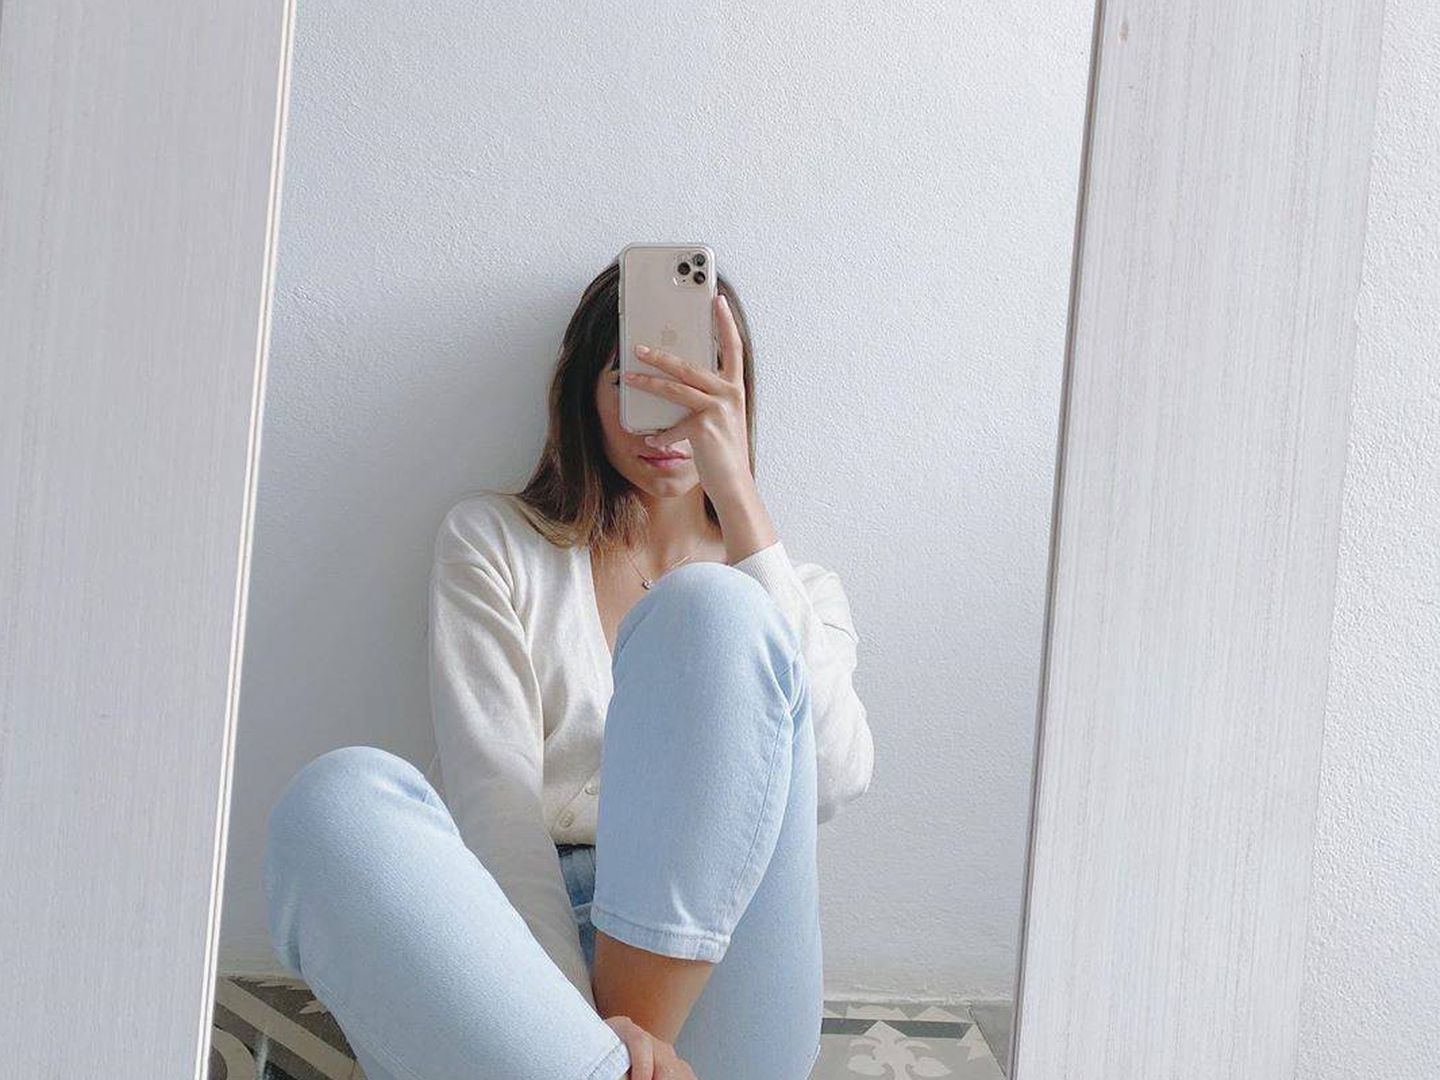 Un selfi de Aitana frente al espejo. (Instagram)